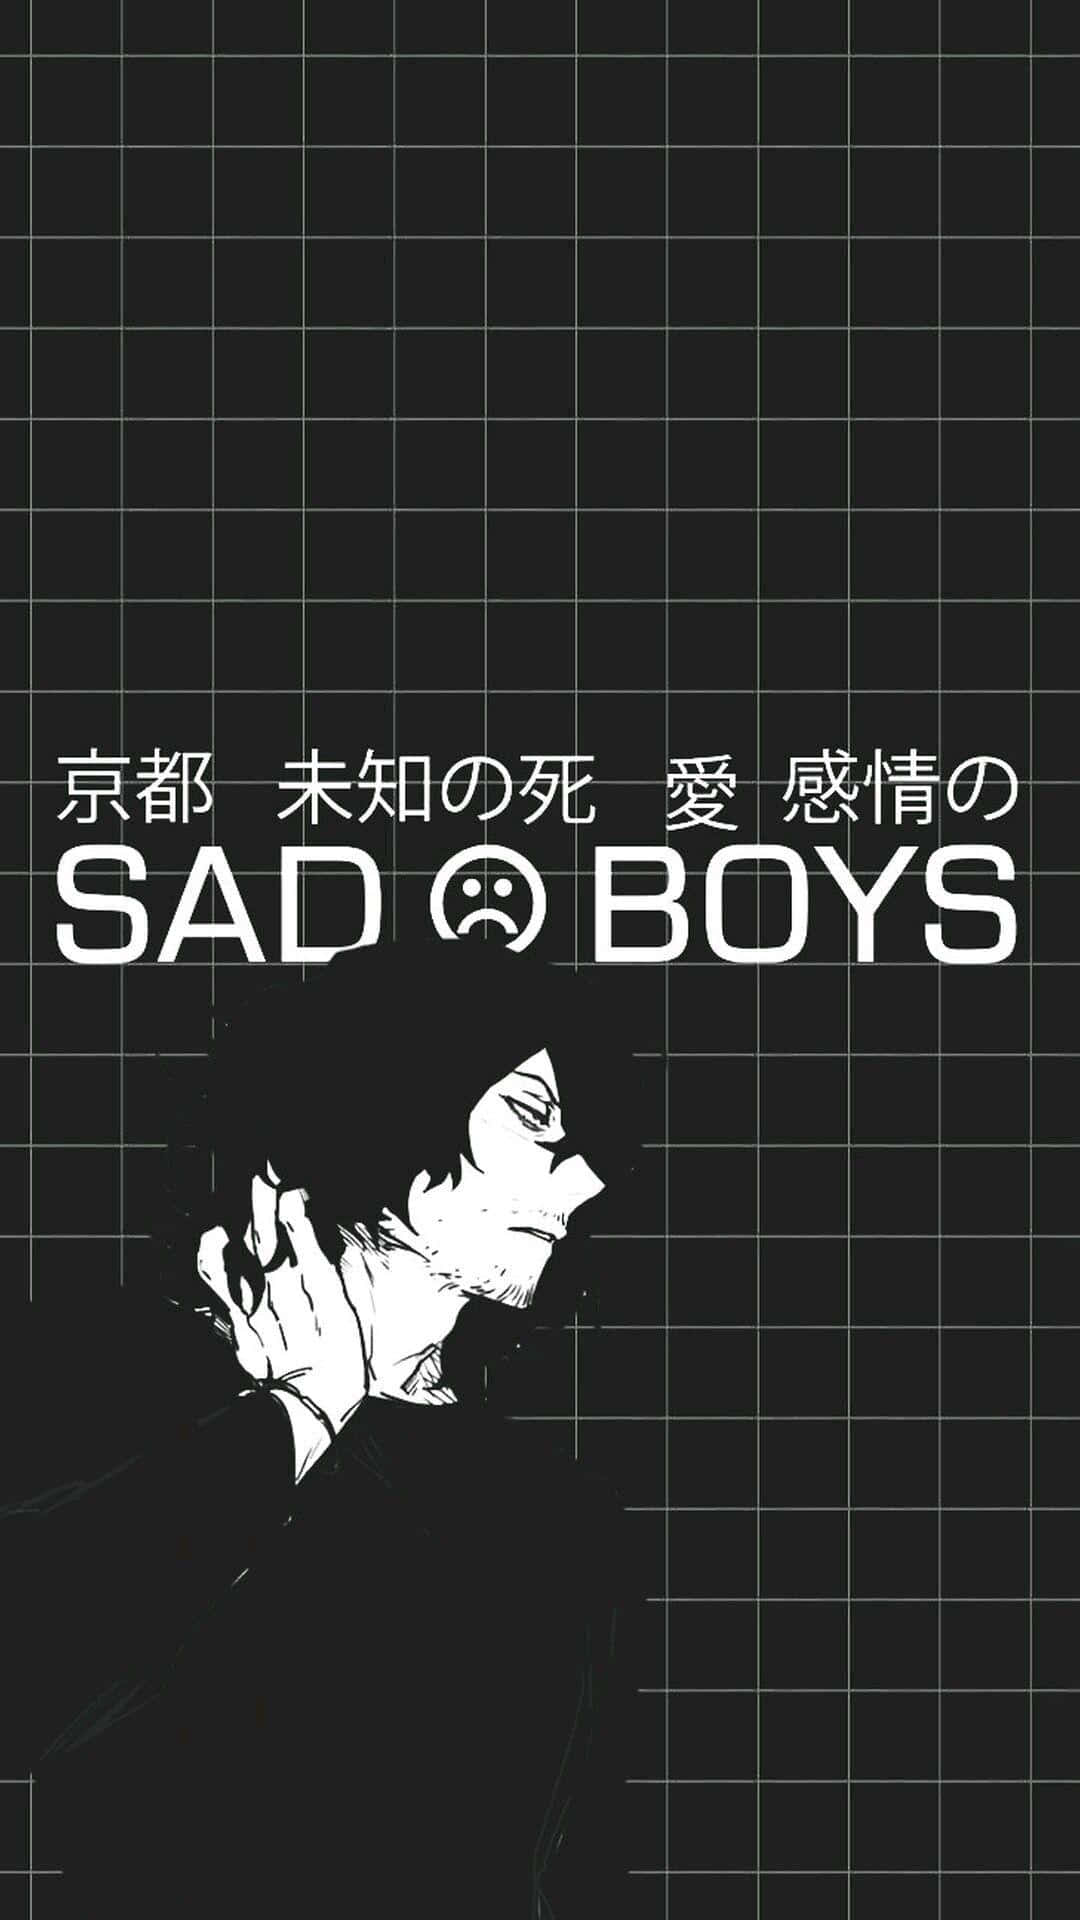 Sad Boys Japanese Aesthetic Black Wallpaper